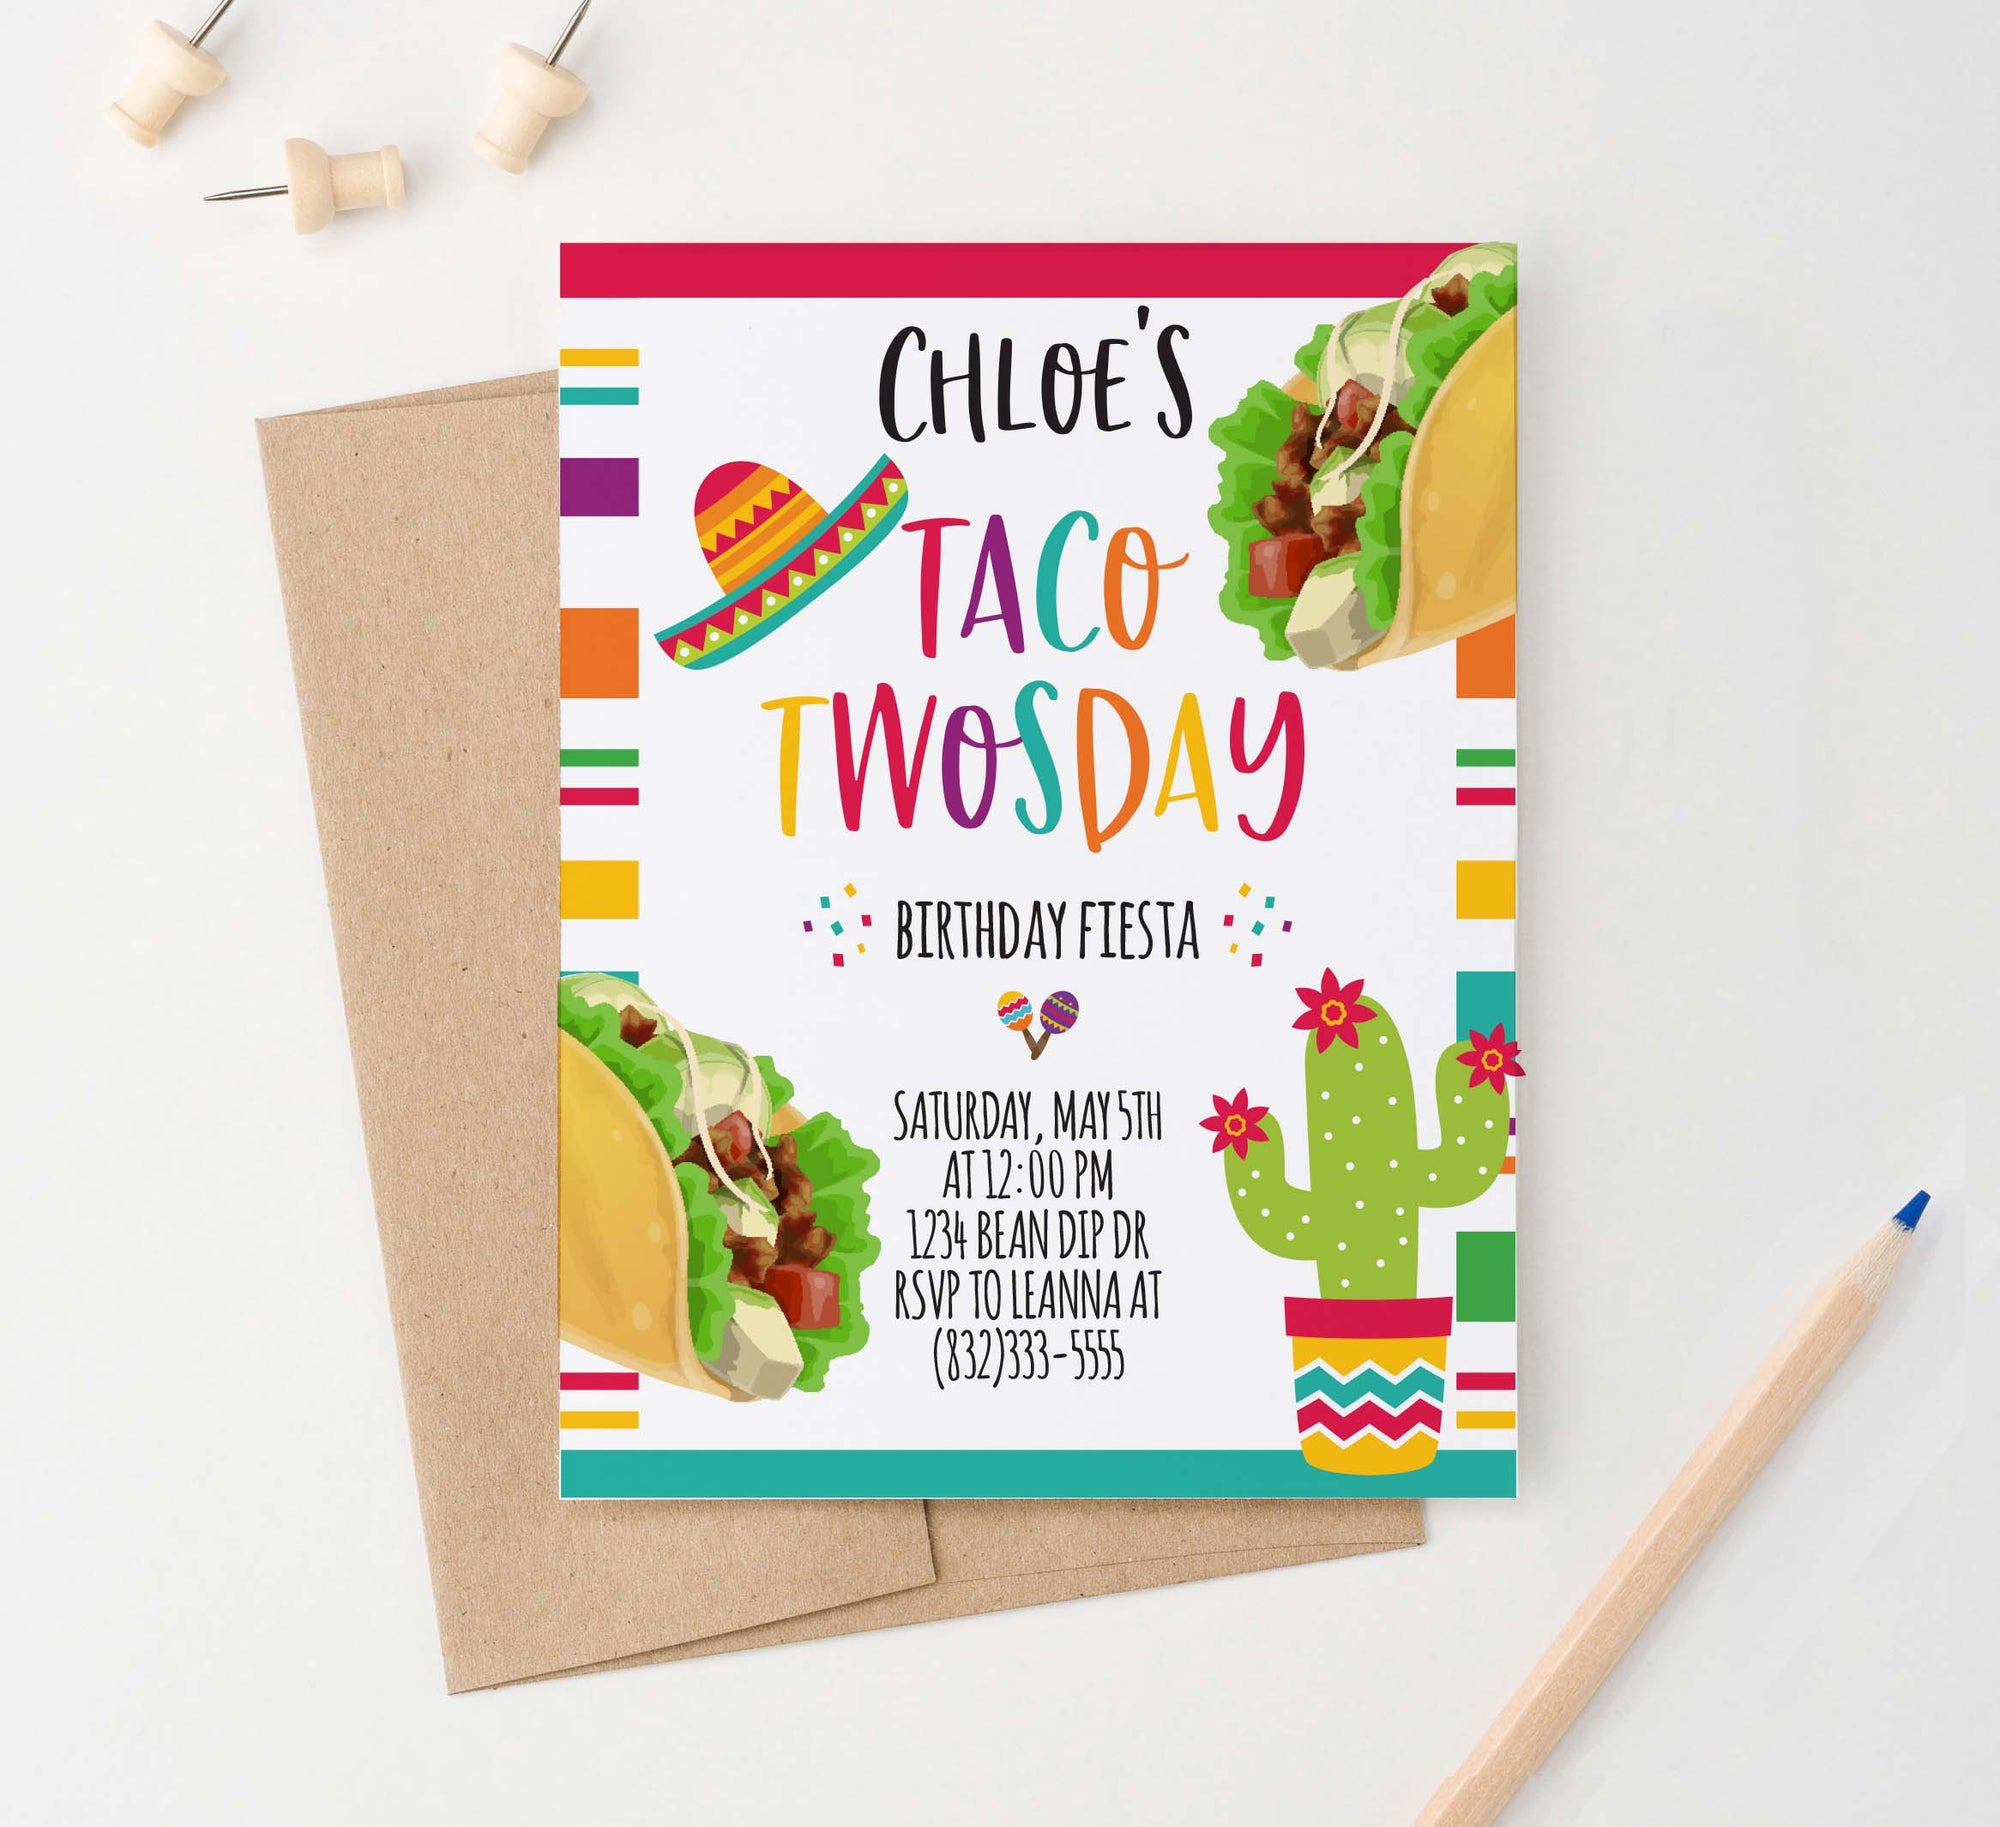 BI064 taco tuesday fiesta birthday party invites personalized cactus tacos festive